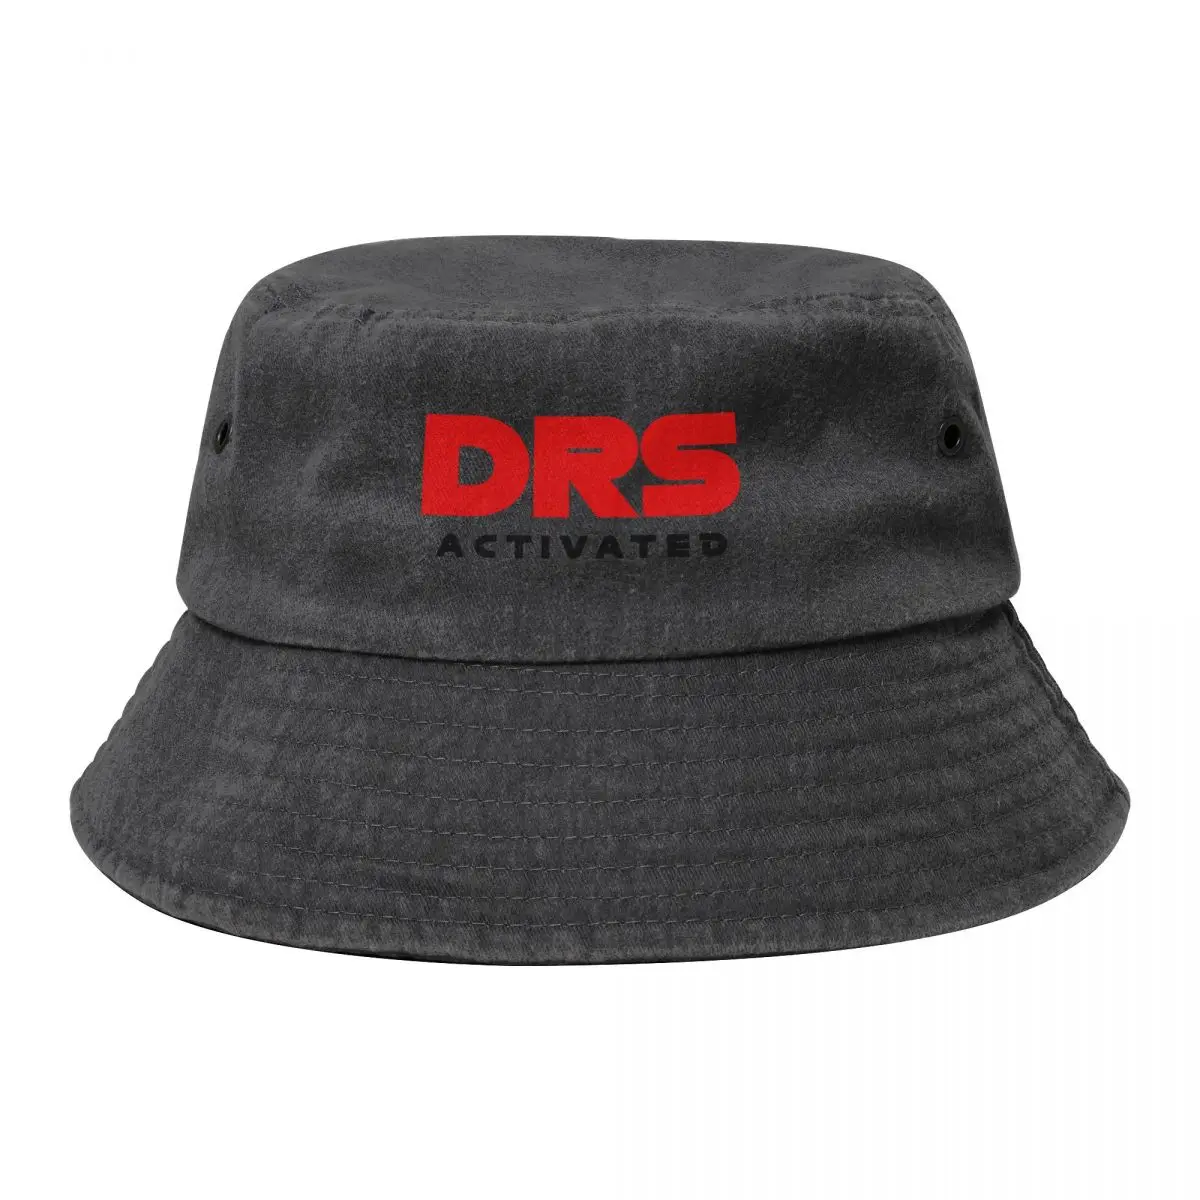 

DRS Activated F1 Design Bucket Hat Fluffy Hat Fishing cap Hat Baseball Cap Golf Men Women's